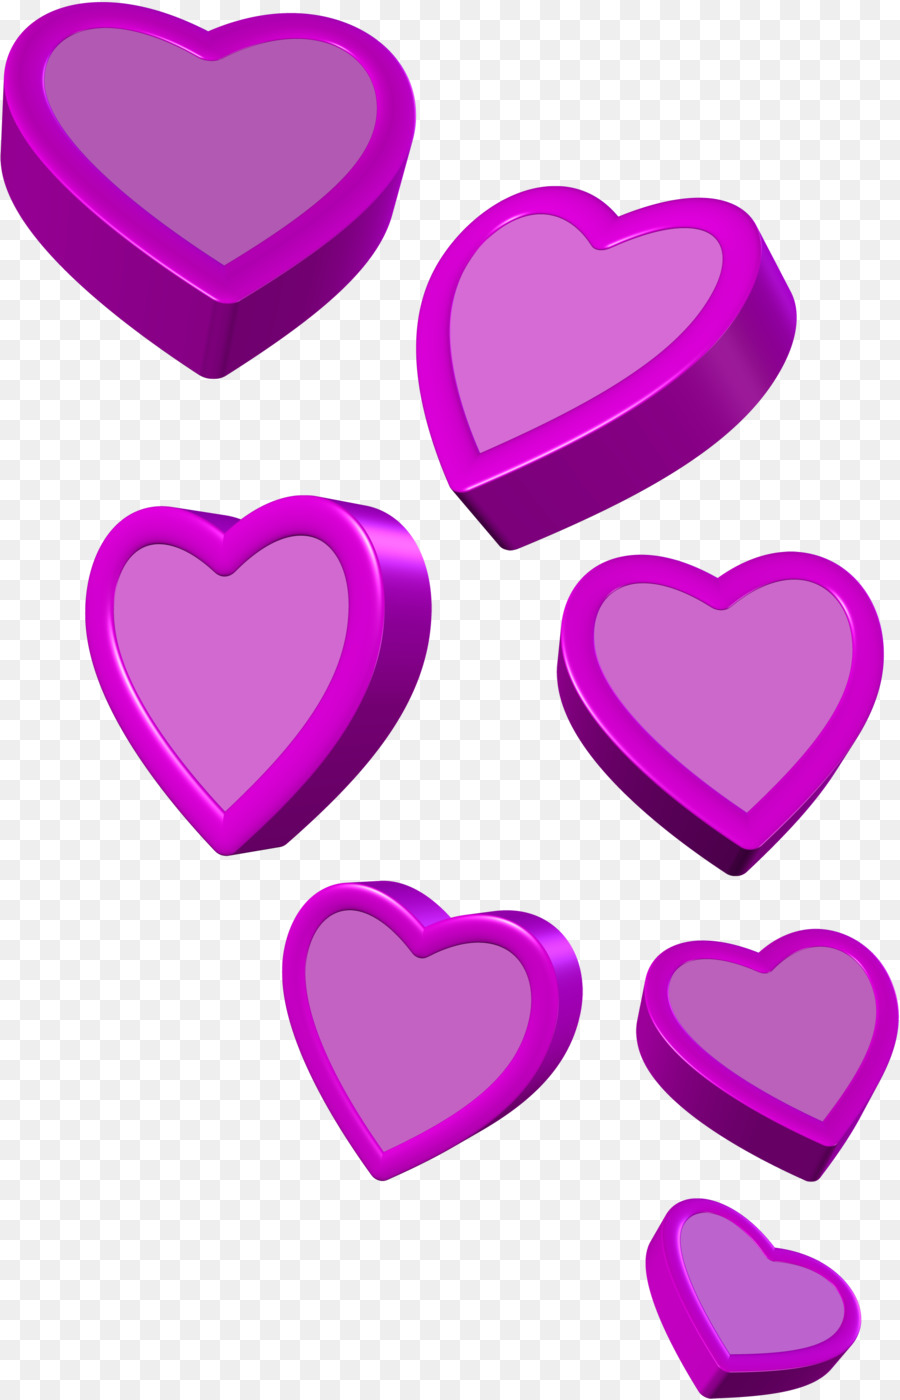 Desktop Wallpaper Heart Clip art - heart cute png download - 2151*3343 - Free Transparent Desktop Wallpaper png Download.